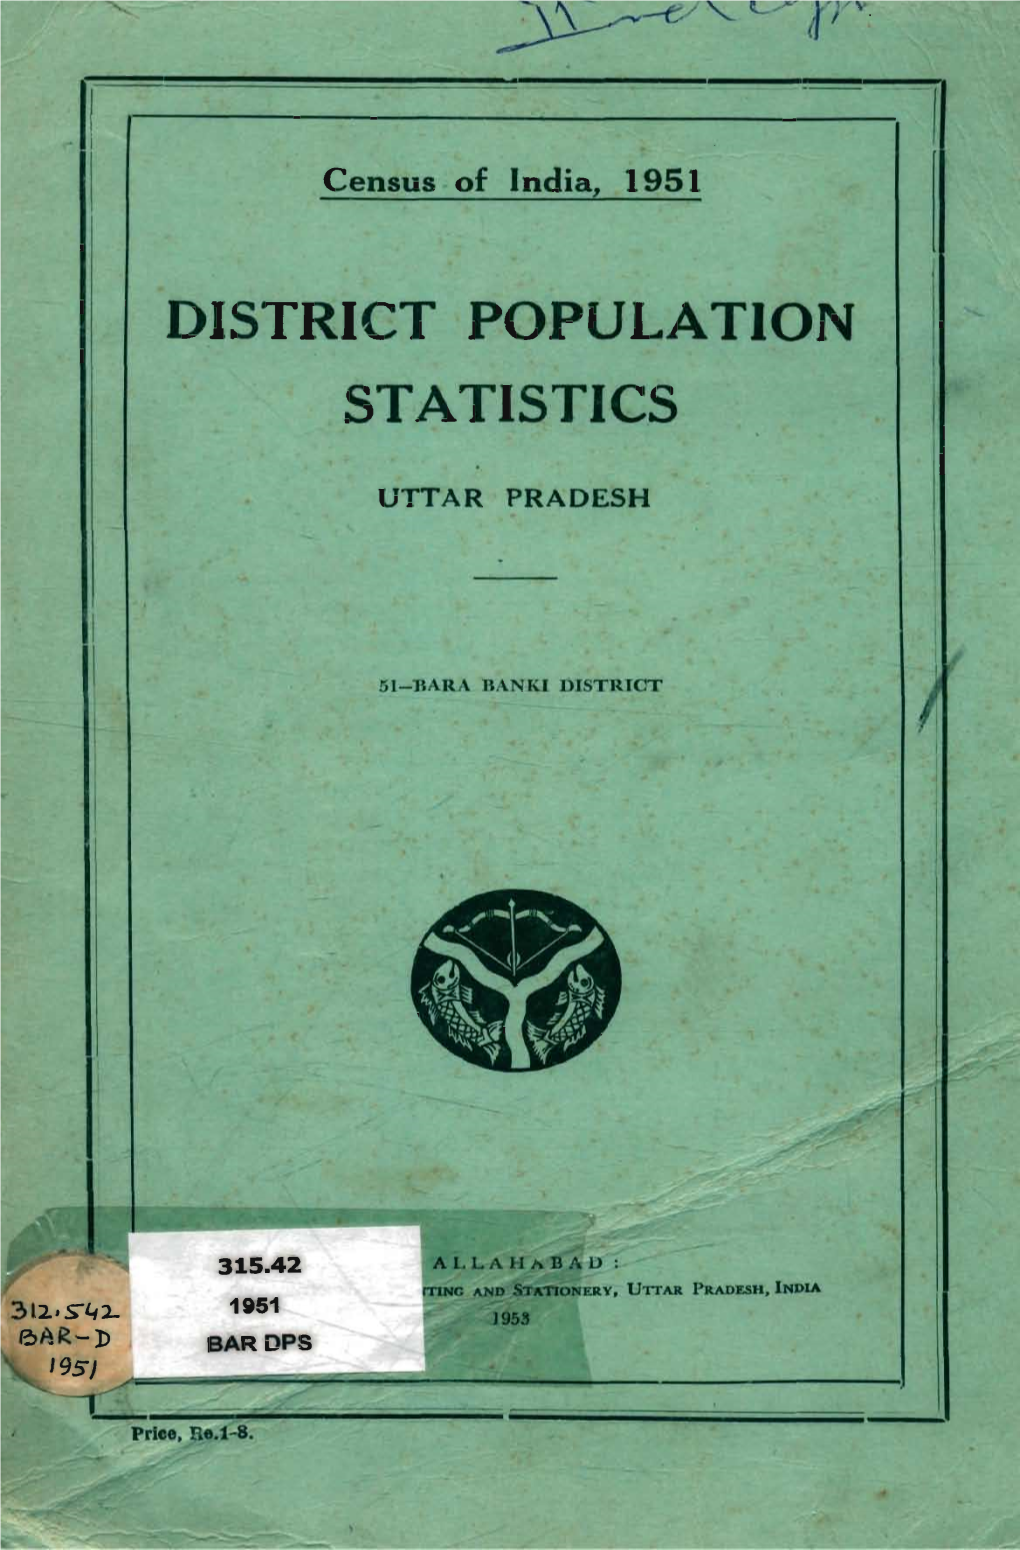 District Population Statistics, 51-Banki, Uttar Pradesh